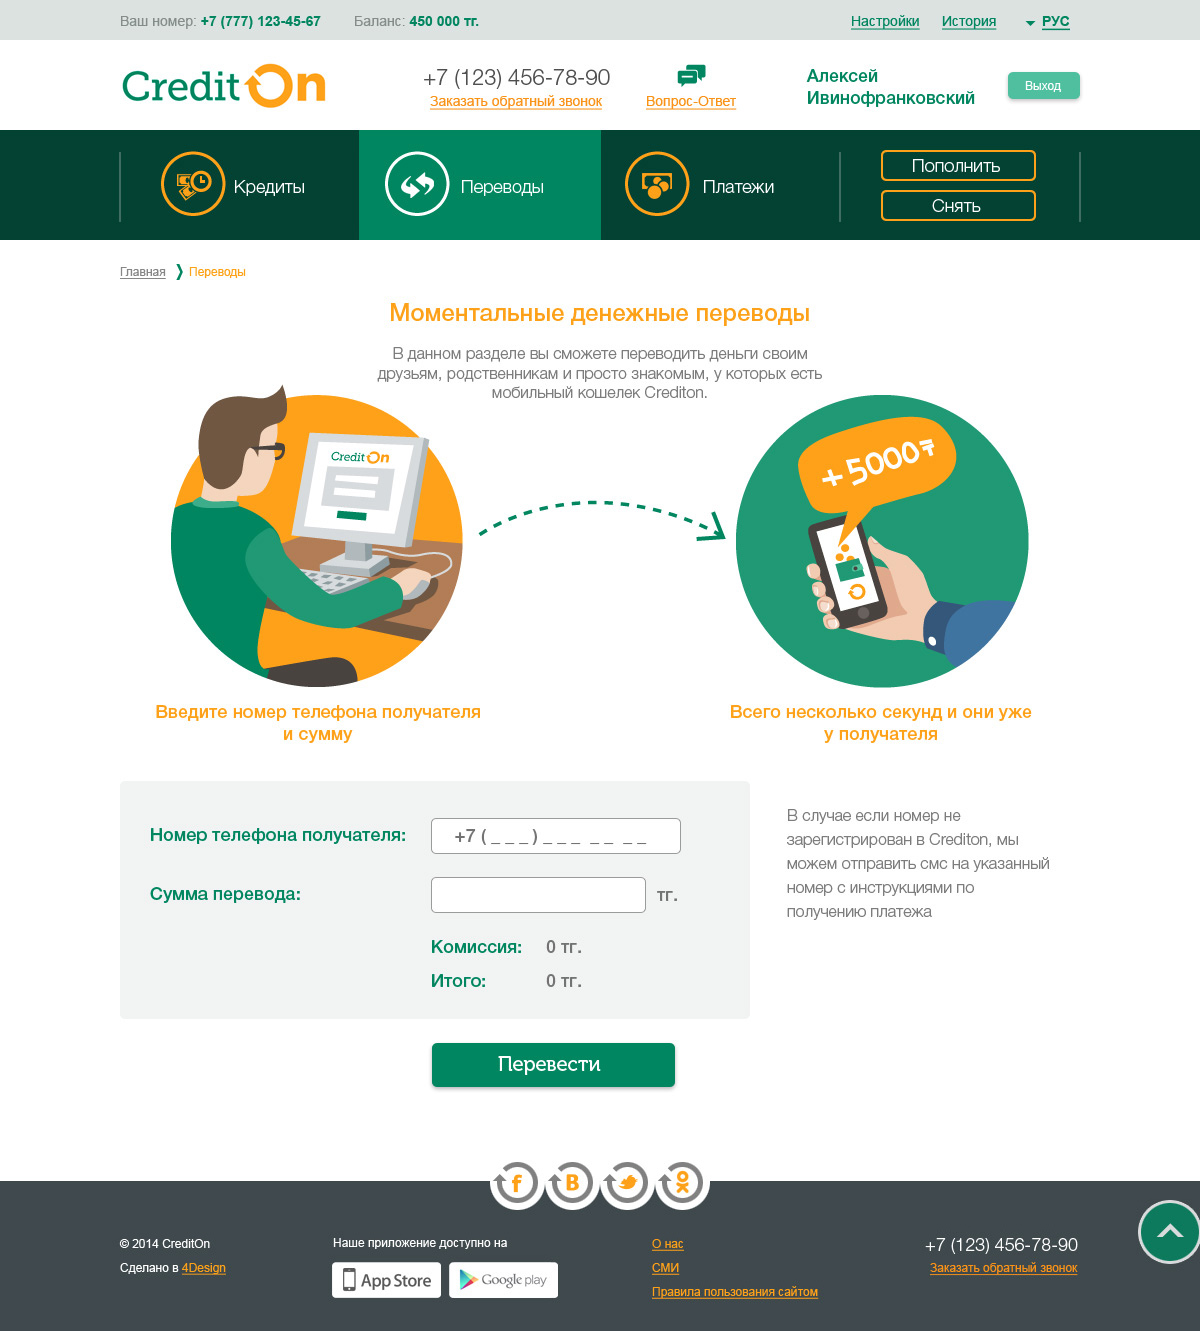 Crediton.kz - система управления финансами и онлайн-кредитования